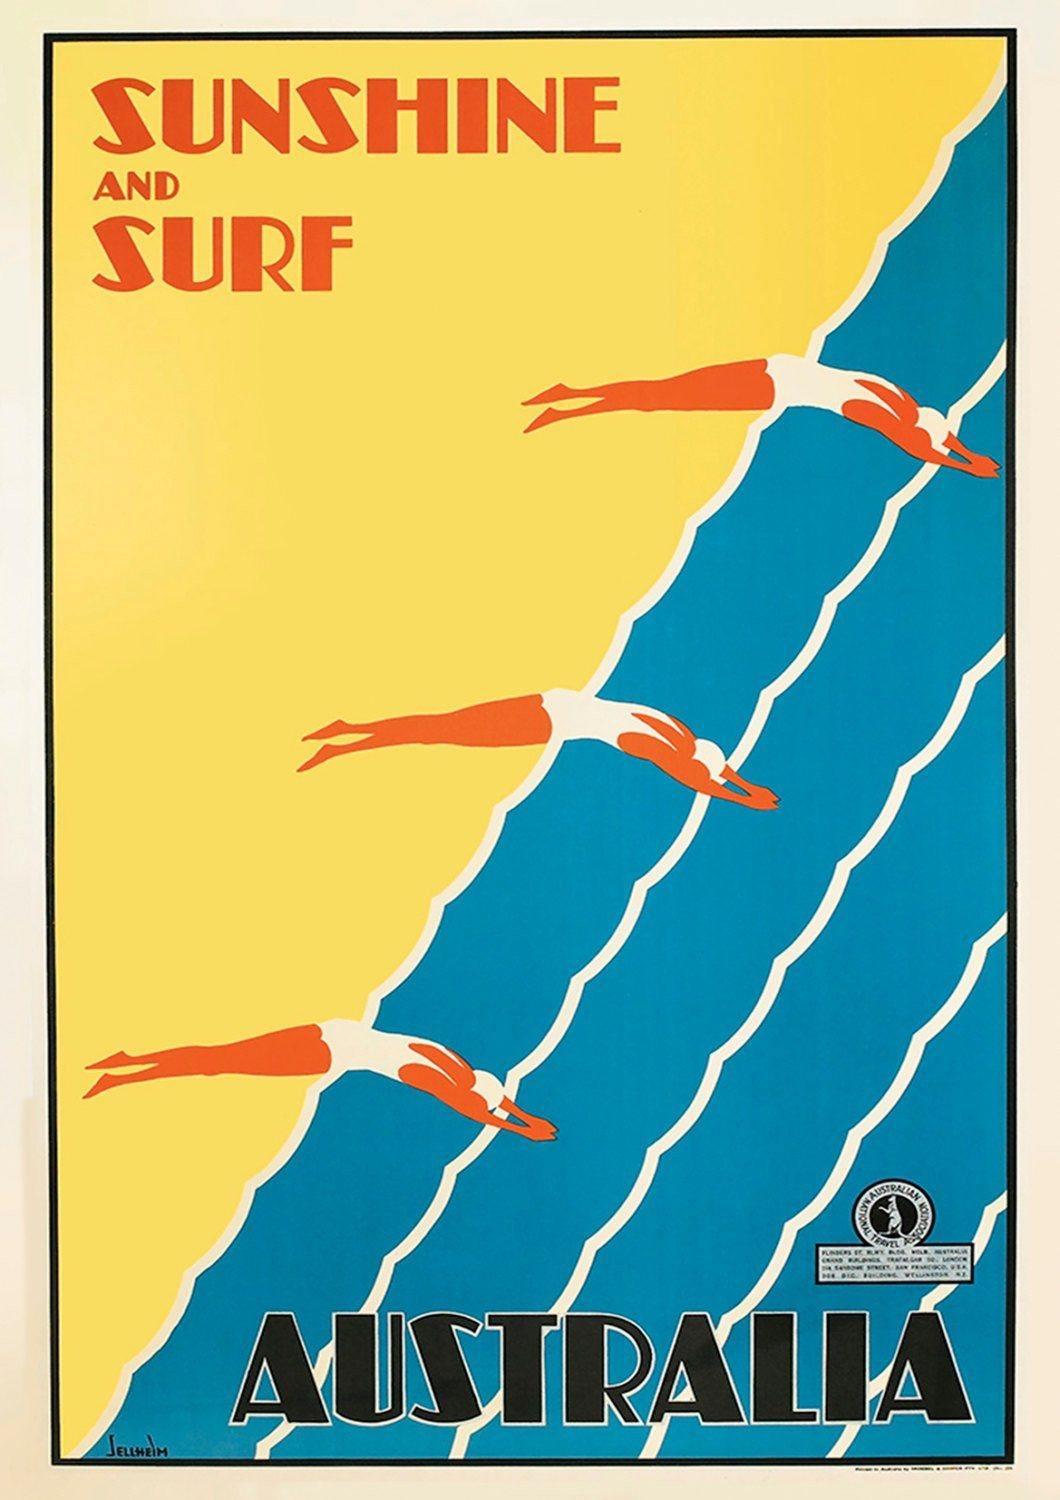 AUSTRALIAN SURF POSTER: Vintage Beach Travel Advert - Pimlico Prints